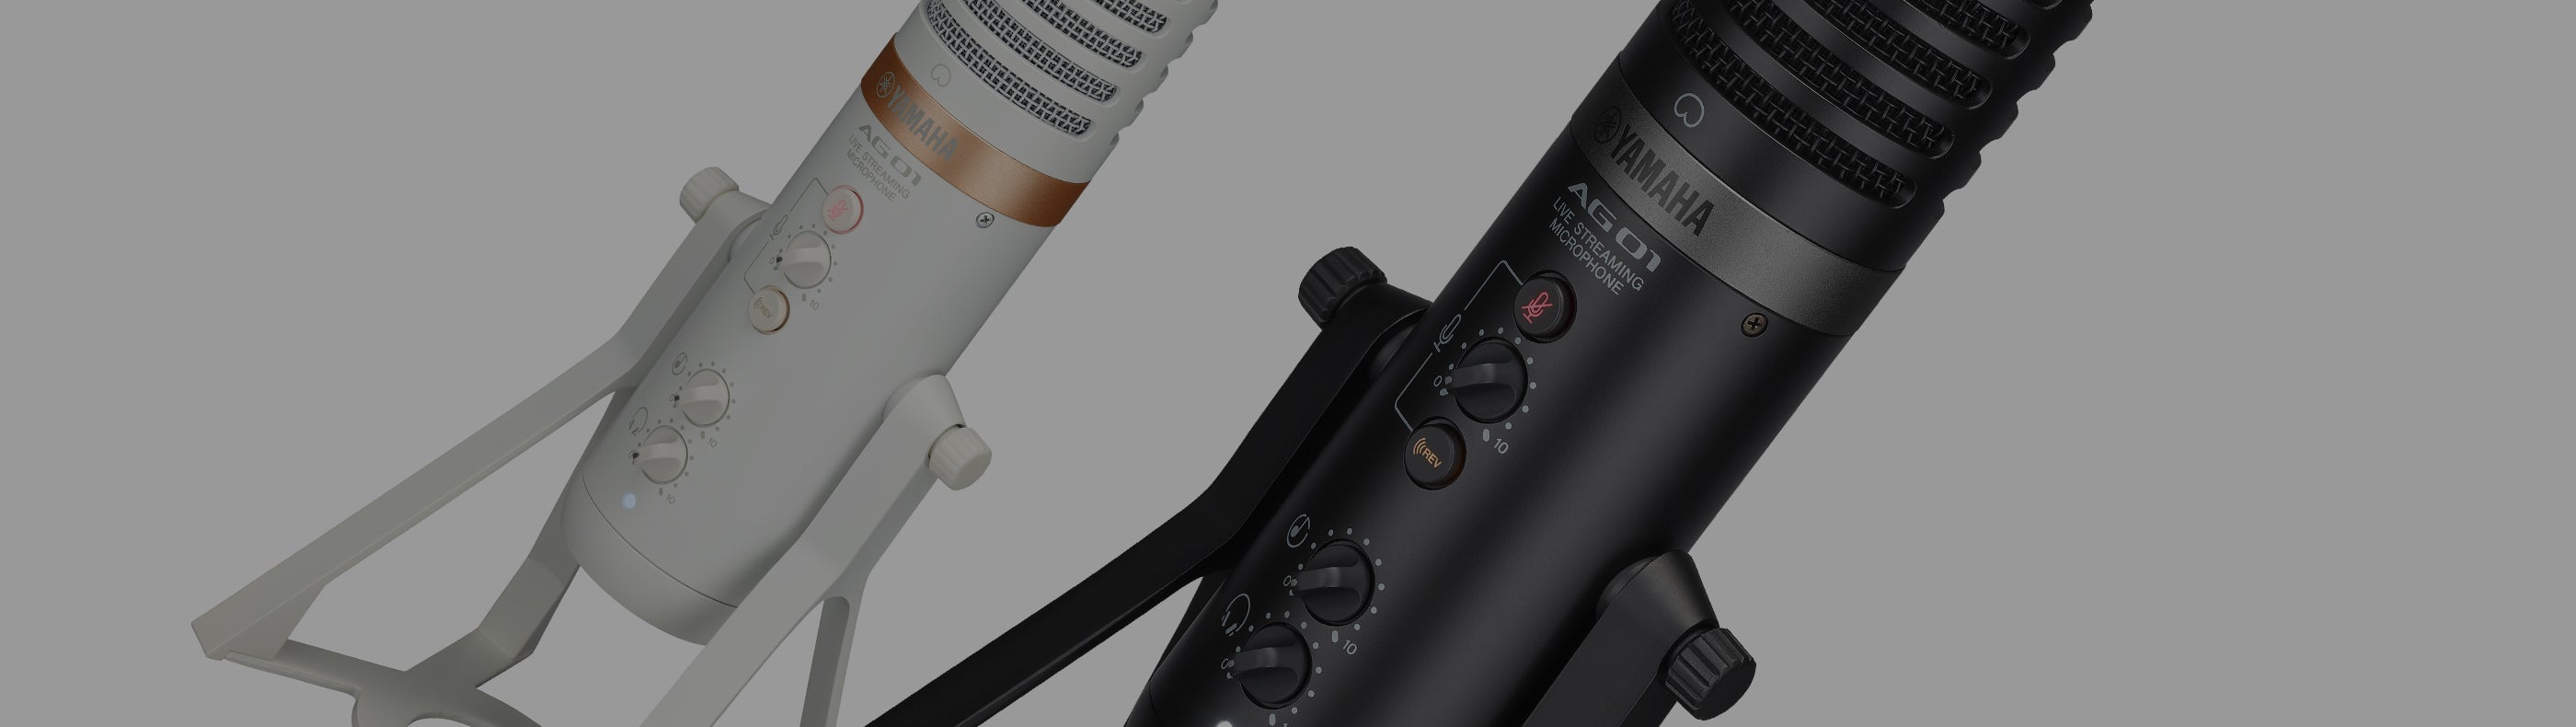 Yamaha AG Series Microphones